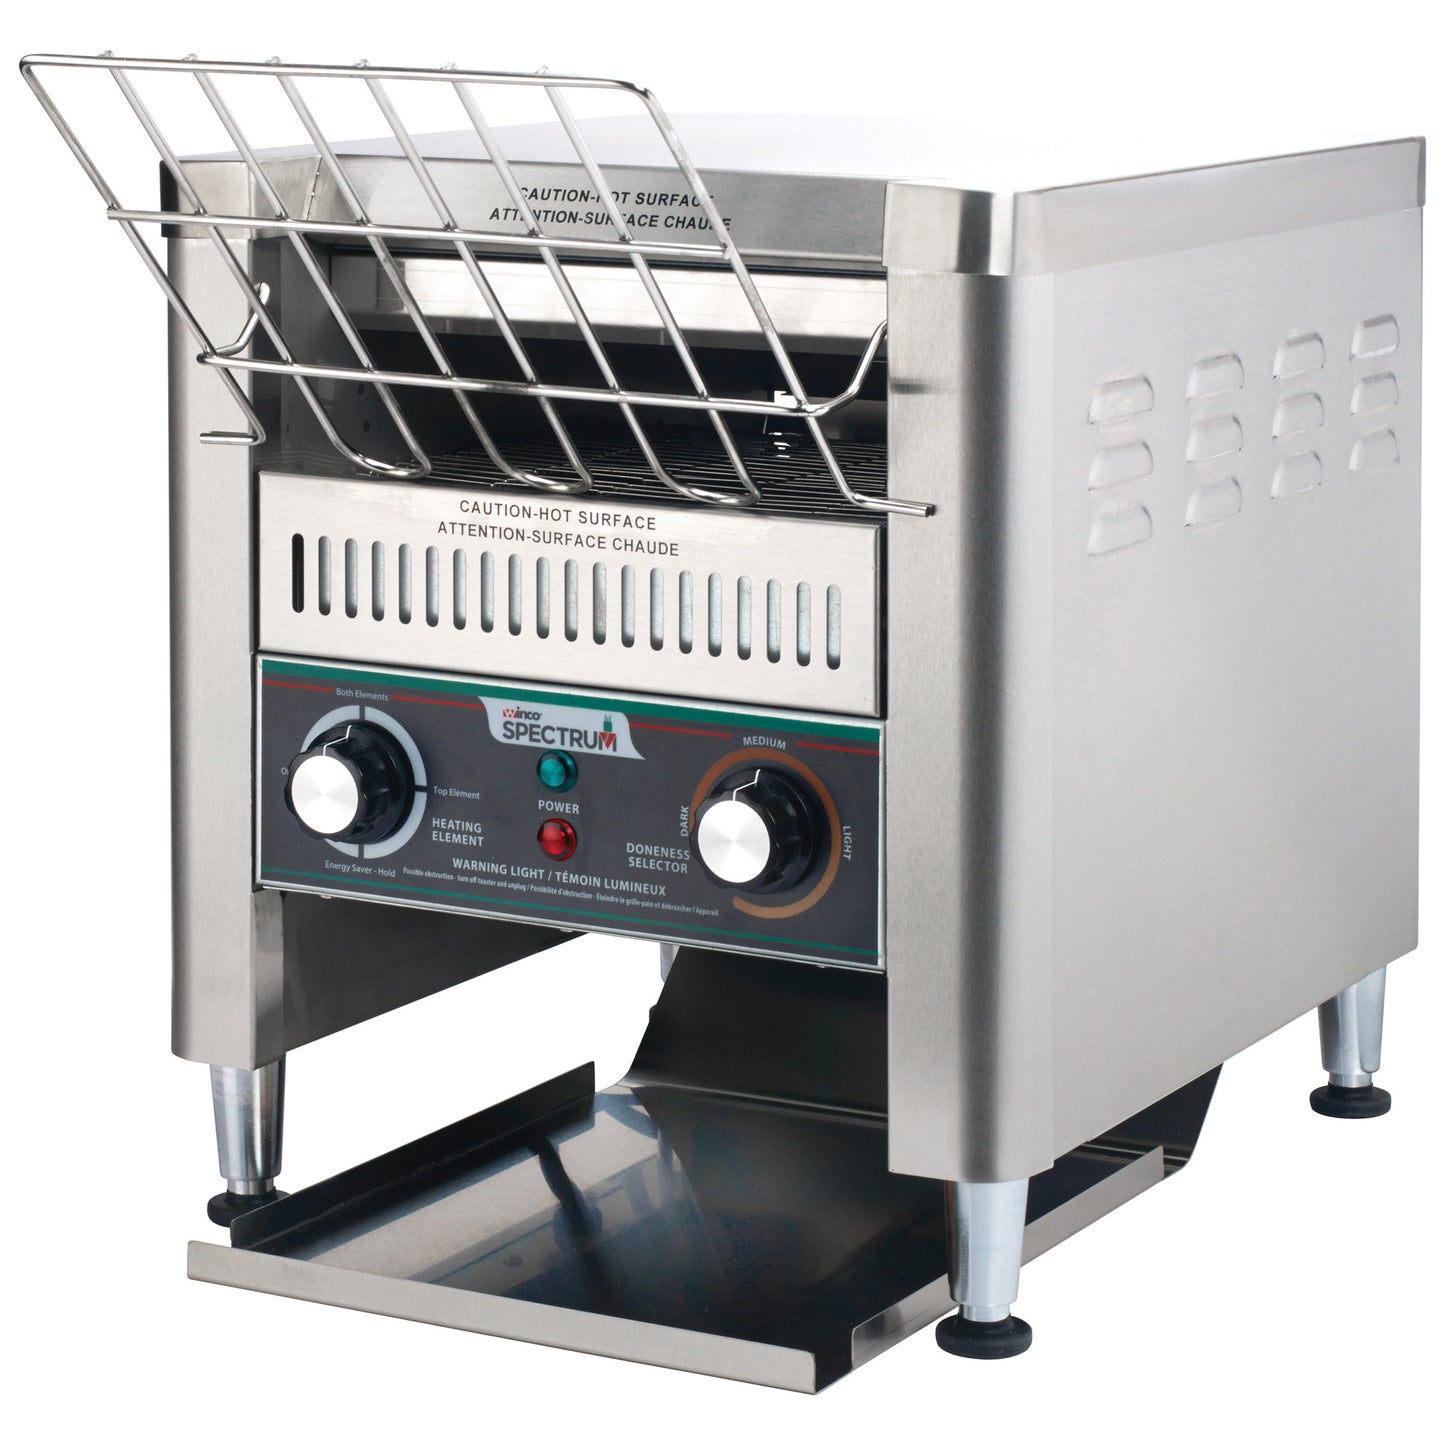 ECT-300 - Spectrum Electric Conveyor Toaster, 120V, 300 Slices per Hour